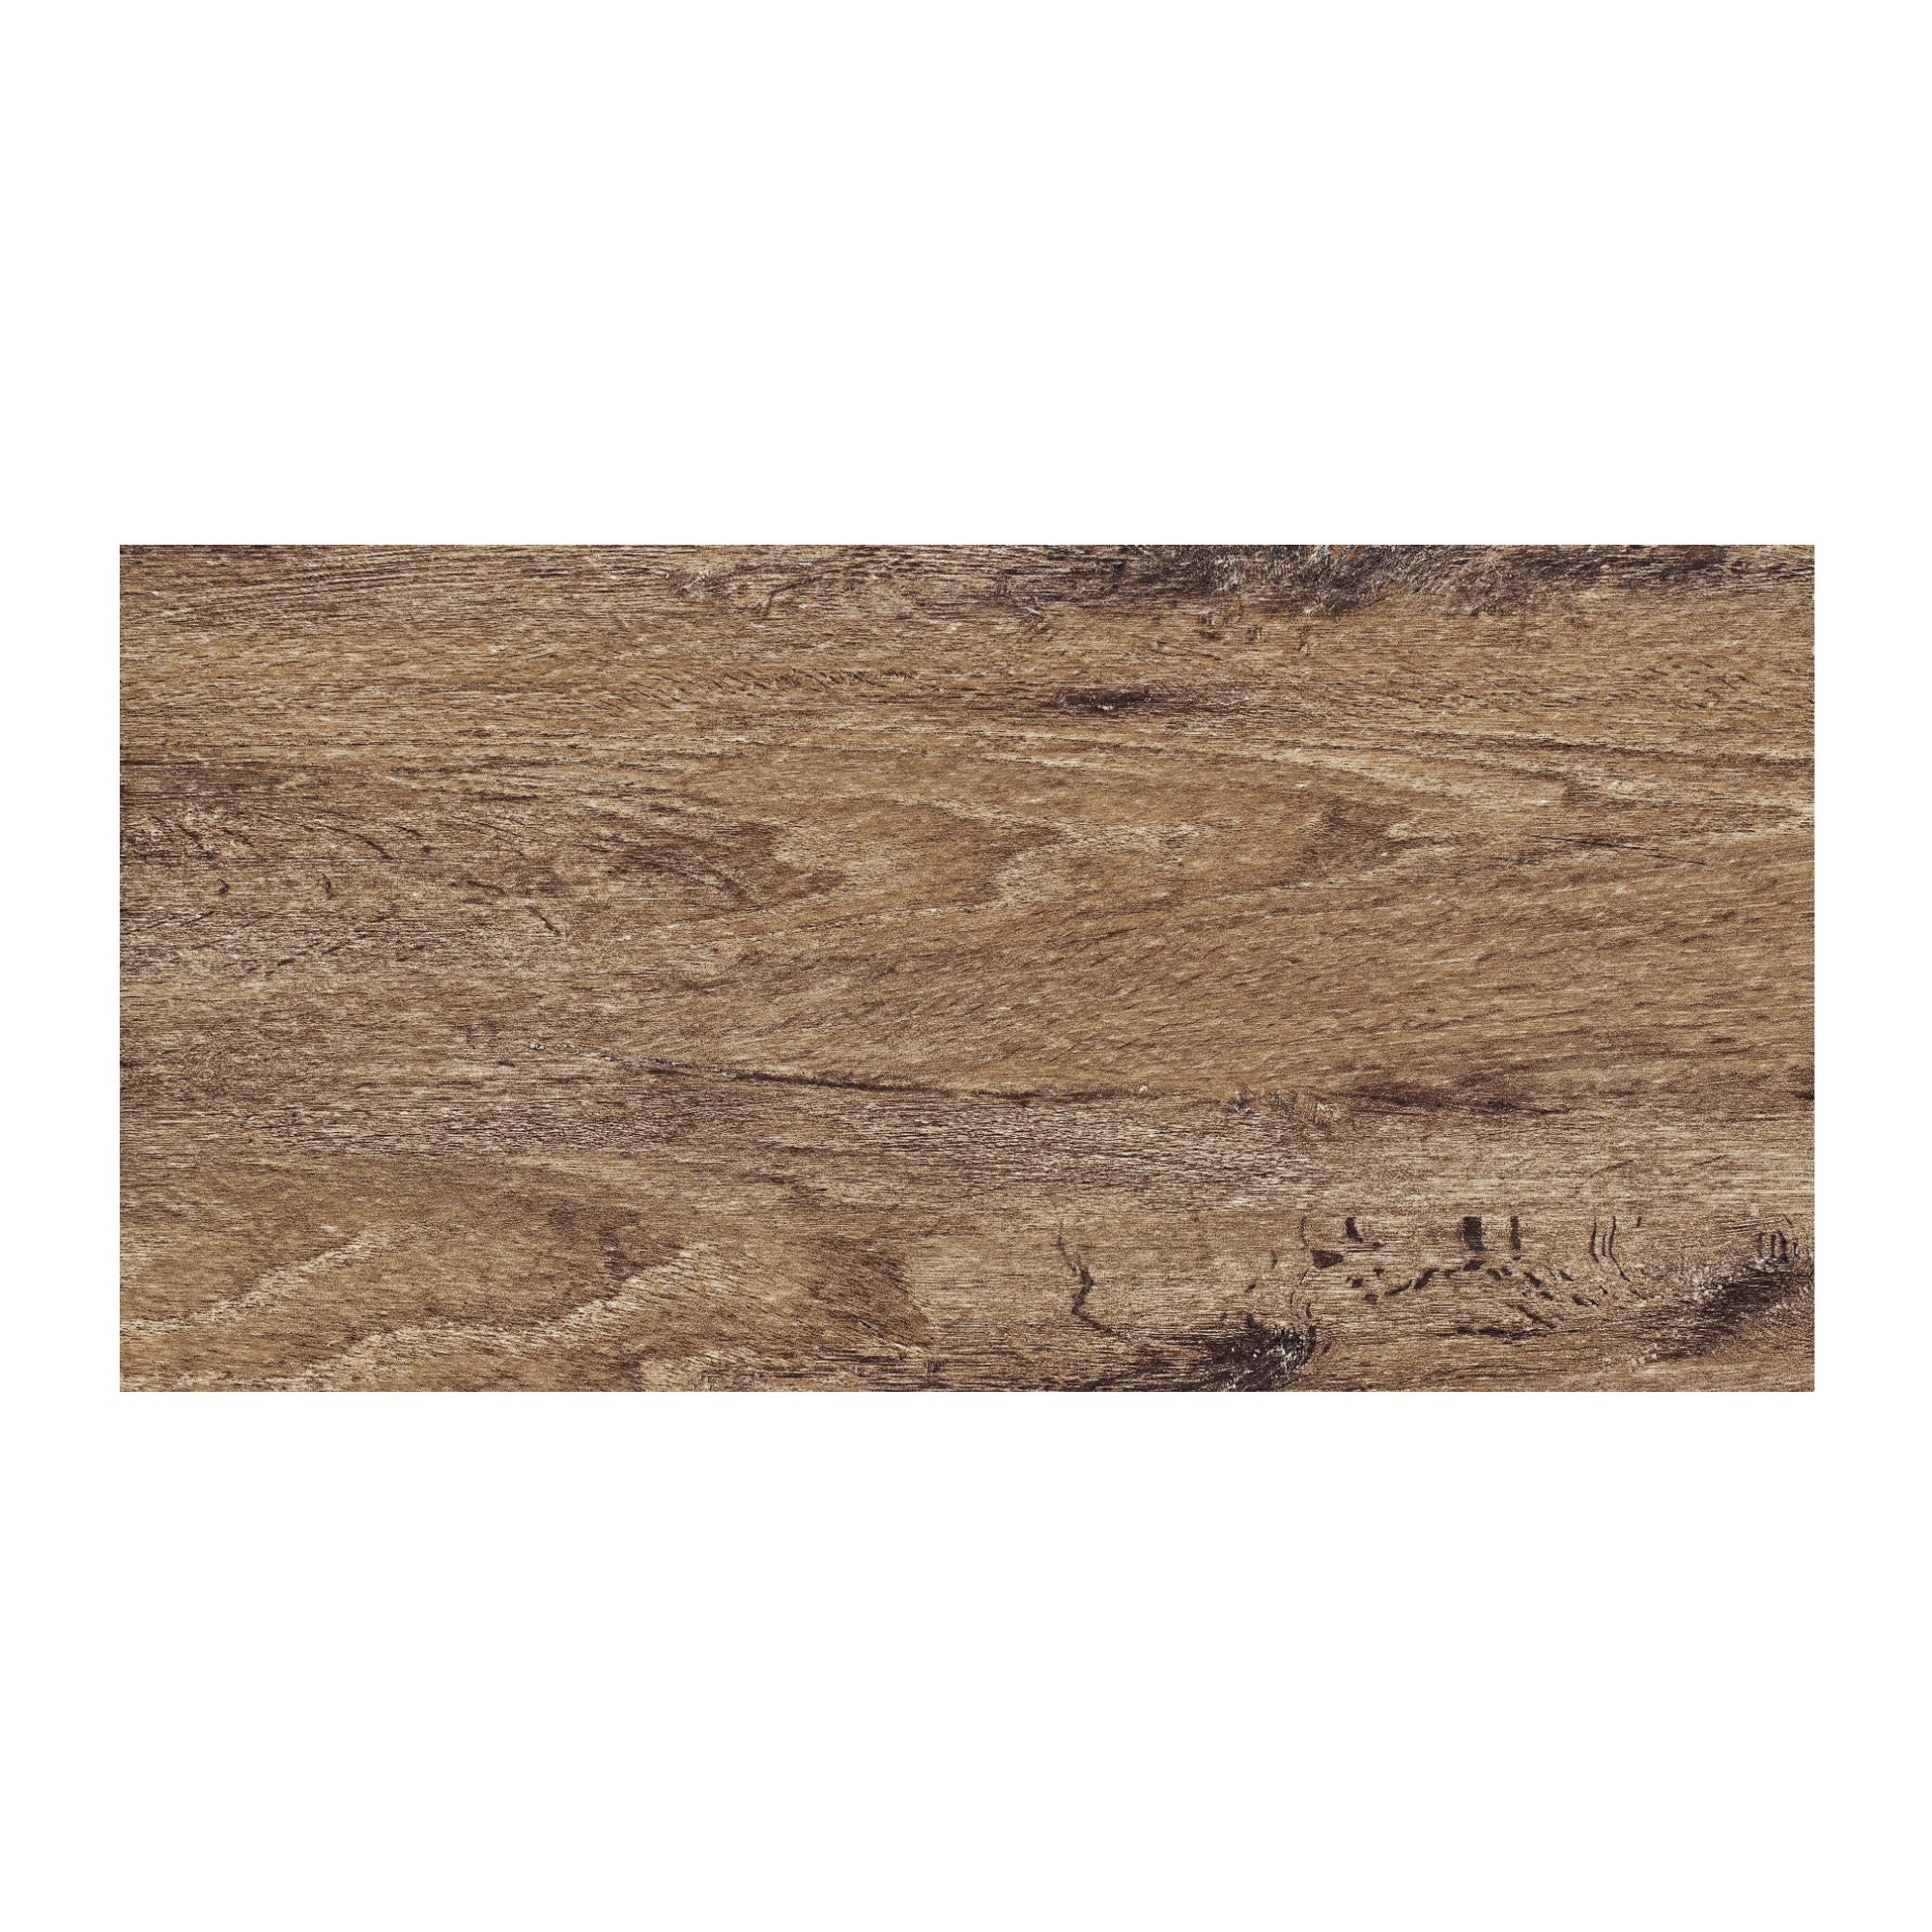 Gresie exterior / interior portelanata Siena, mata, maro, imitatie lemn, antiderapanta, 31 x 62 cm